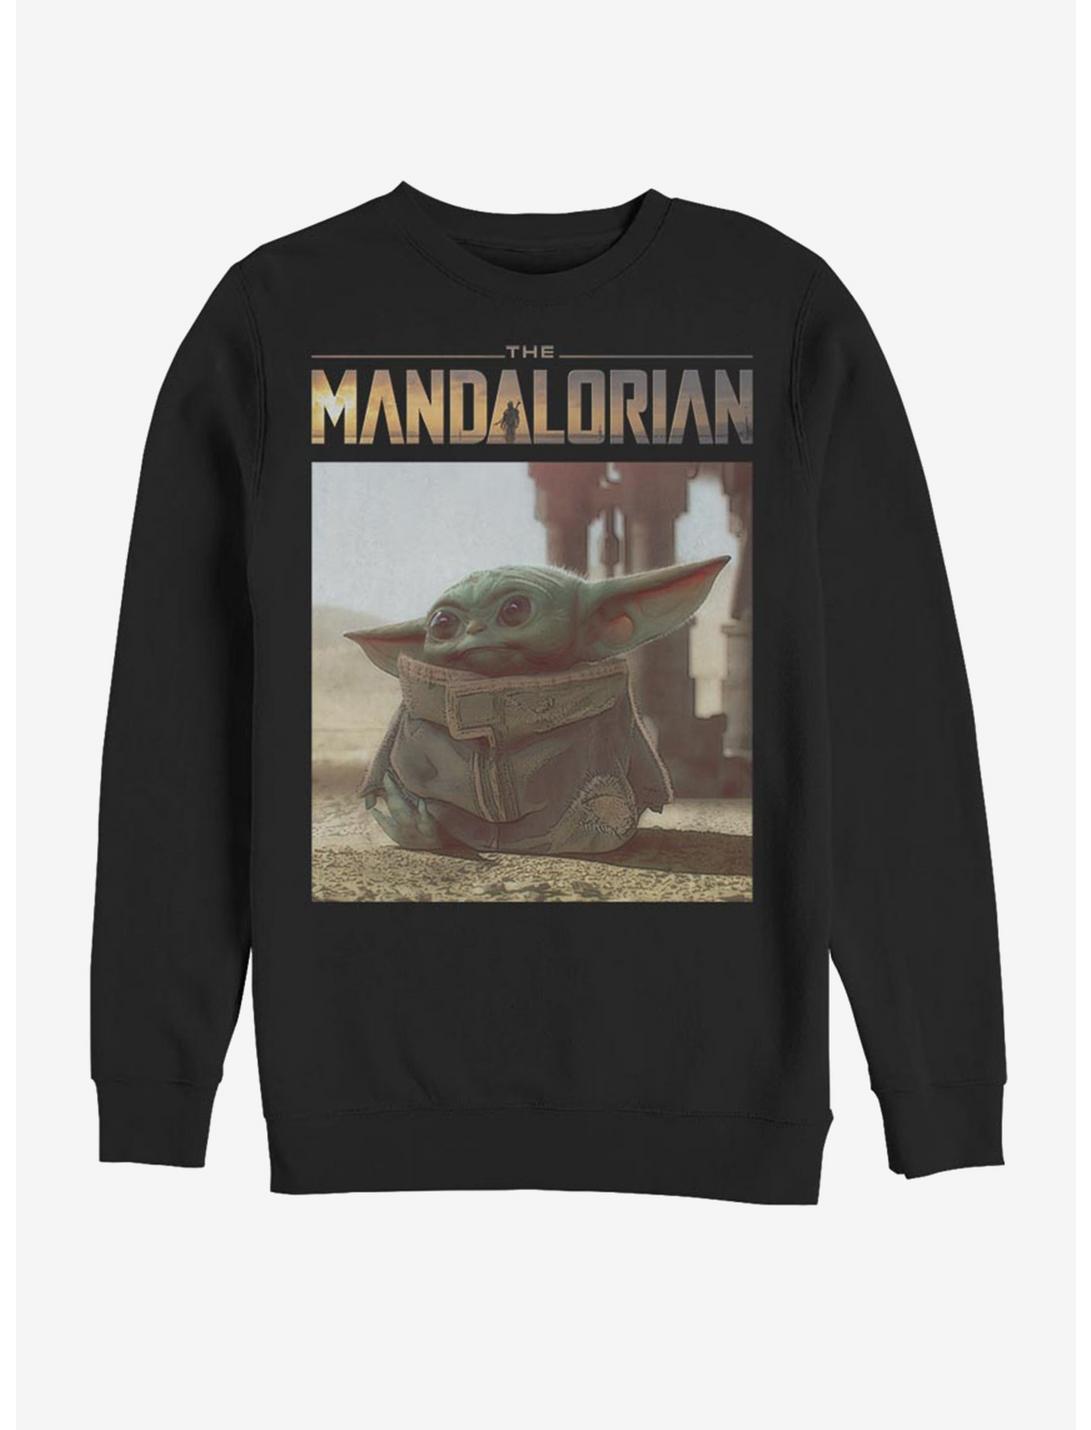 Plus Size Star Wars The Mandalorian The Child All Smiles Sweatshirt, BLACK, hi-res